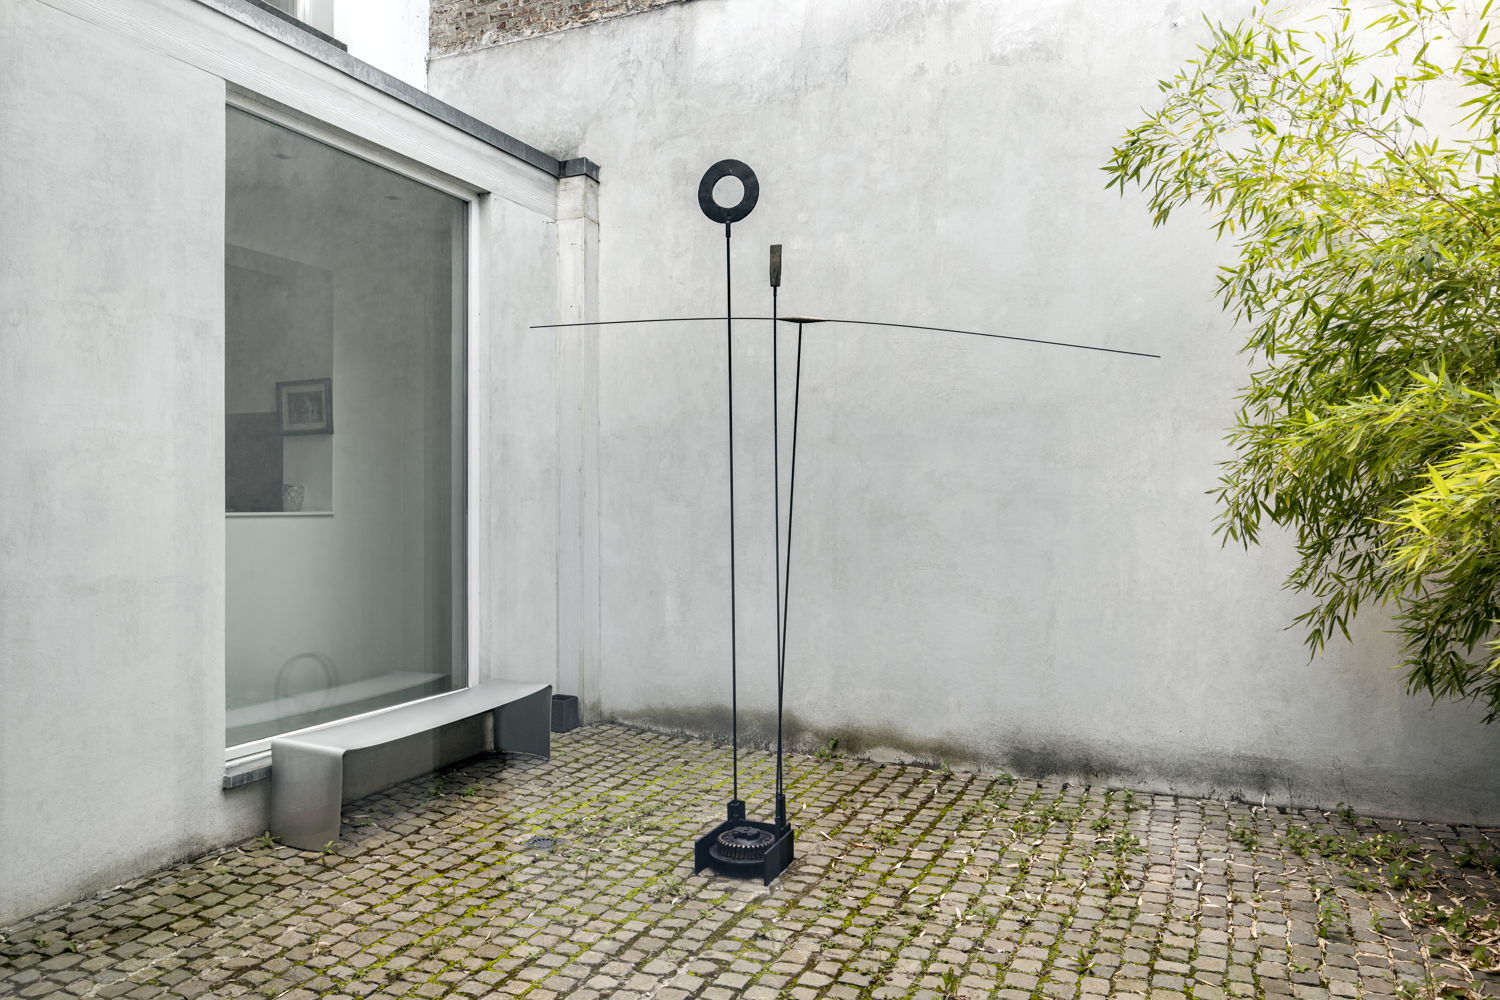 Installation view Quinquagesimum at Fondation CAB, Brussels. Photo by Fabrice Schneider